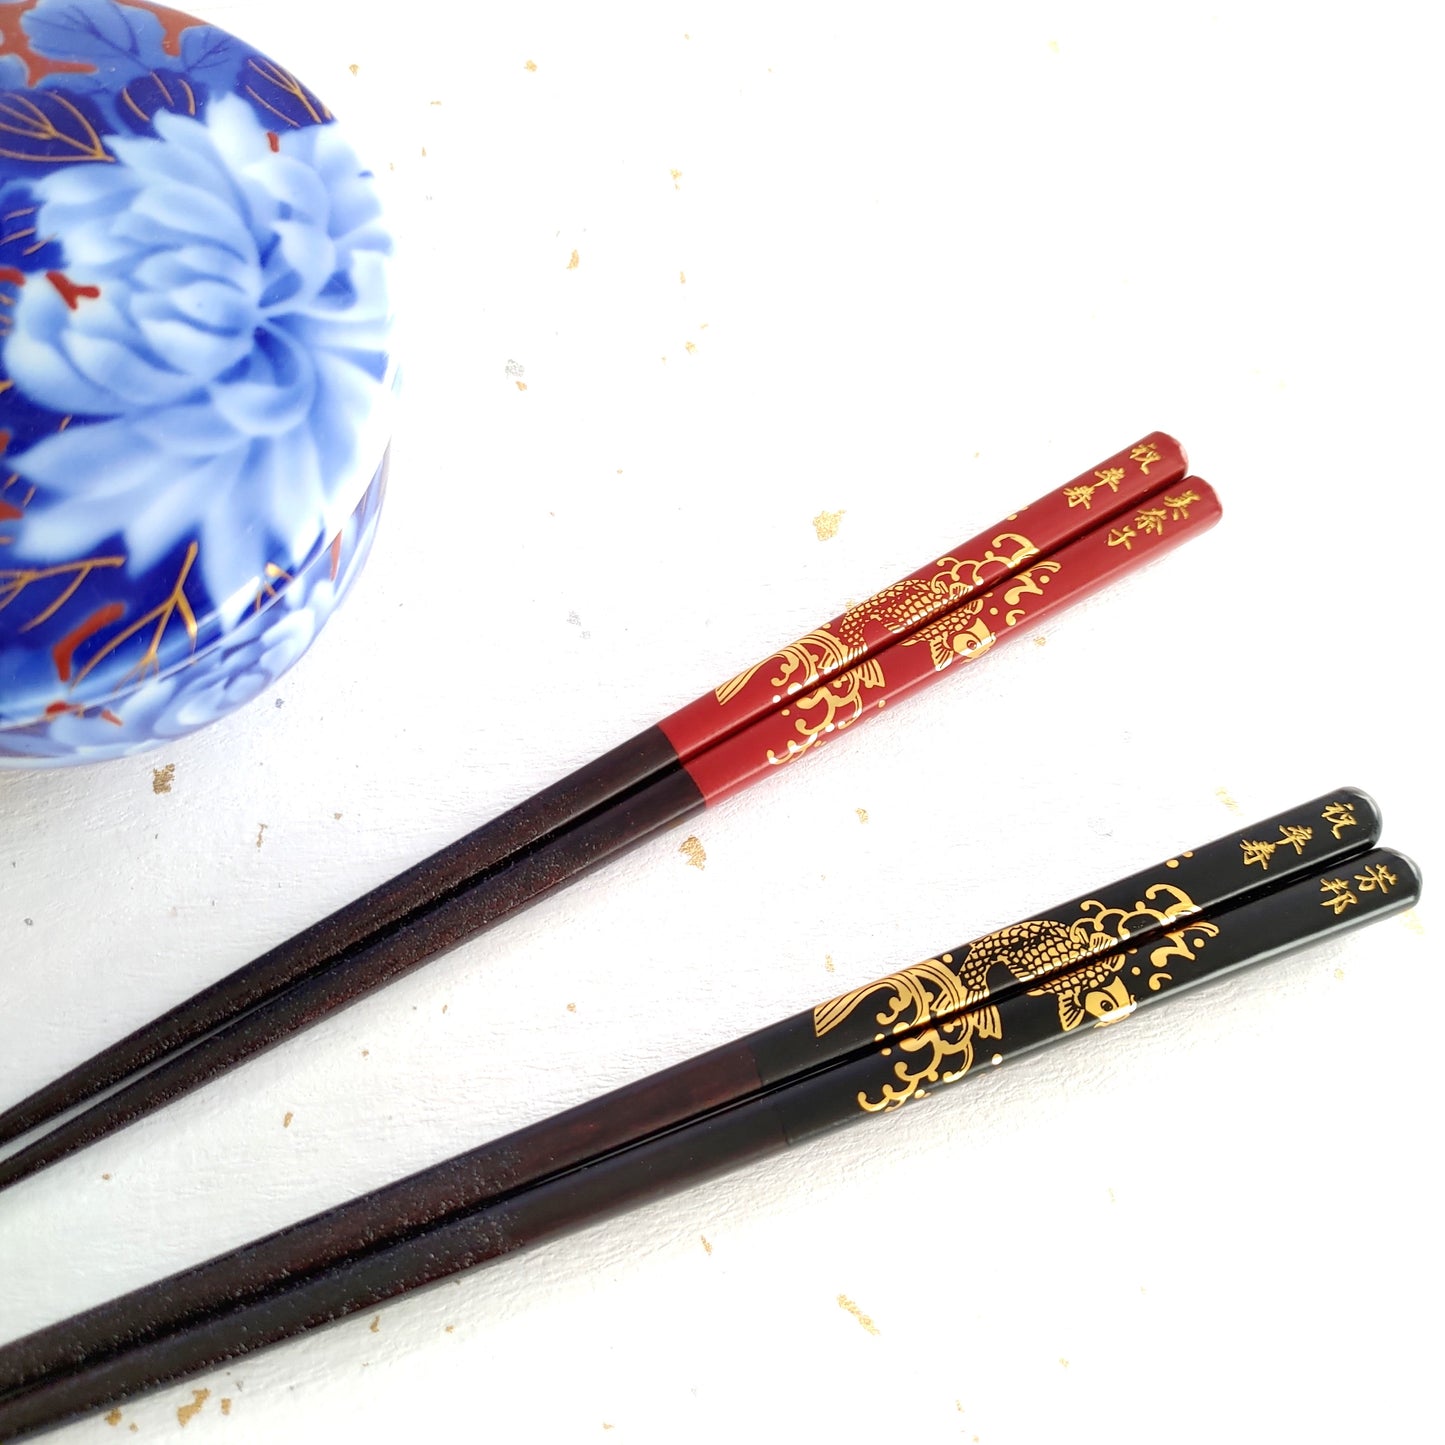 Golden legendary carp Japanese chopsticks black red - DOUBLE PAIR